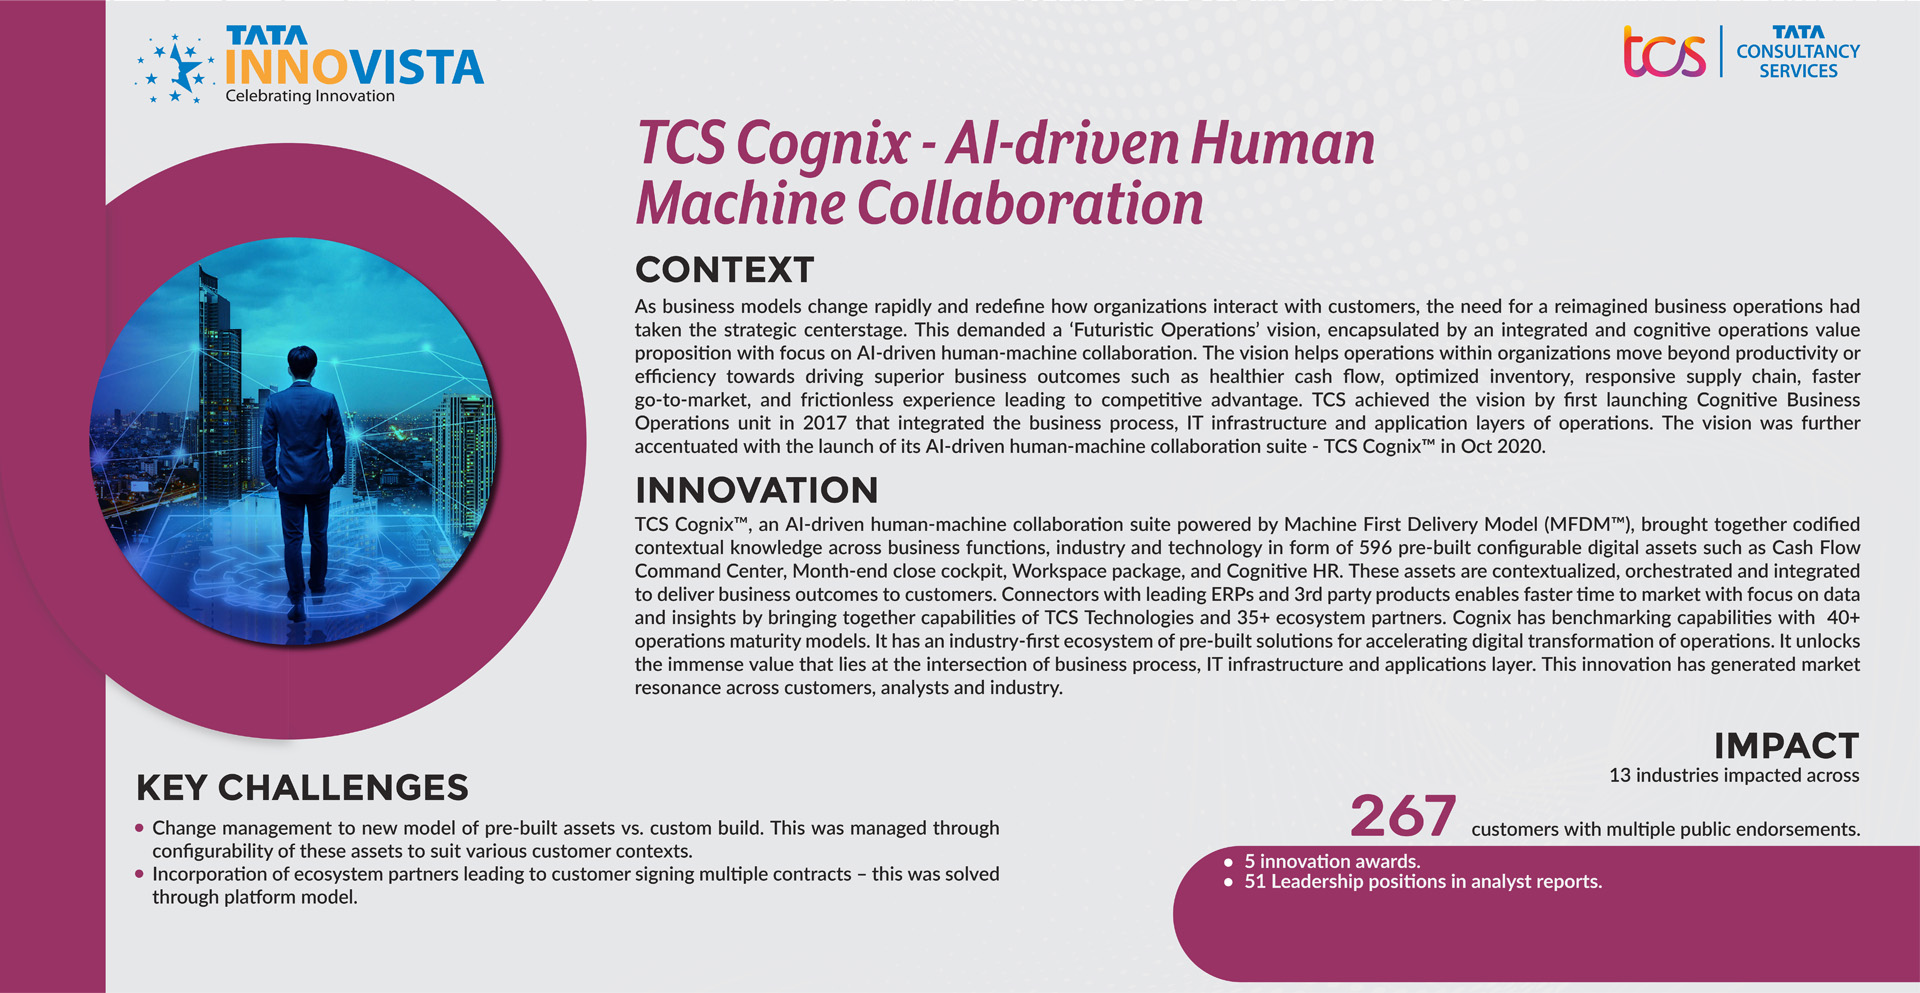 TCS Cognix - AI-driven Human-Machine Collaboration